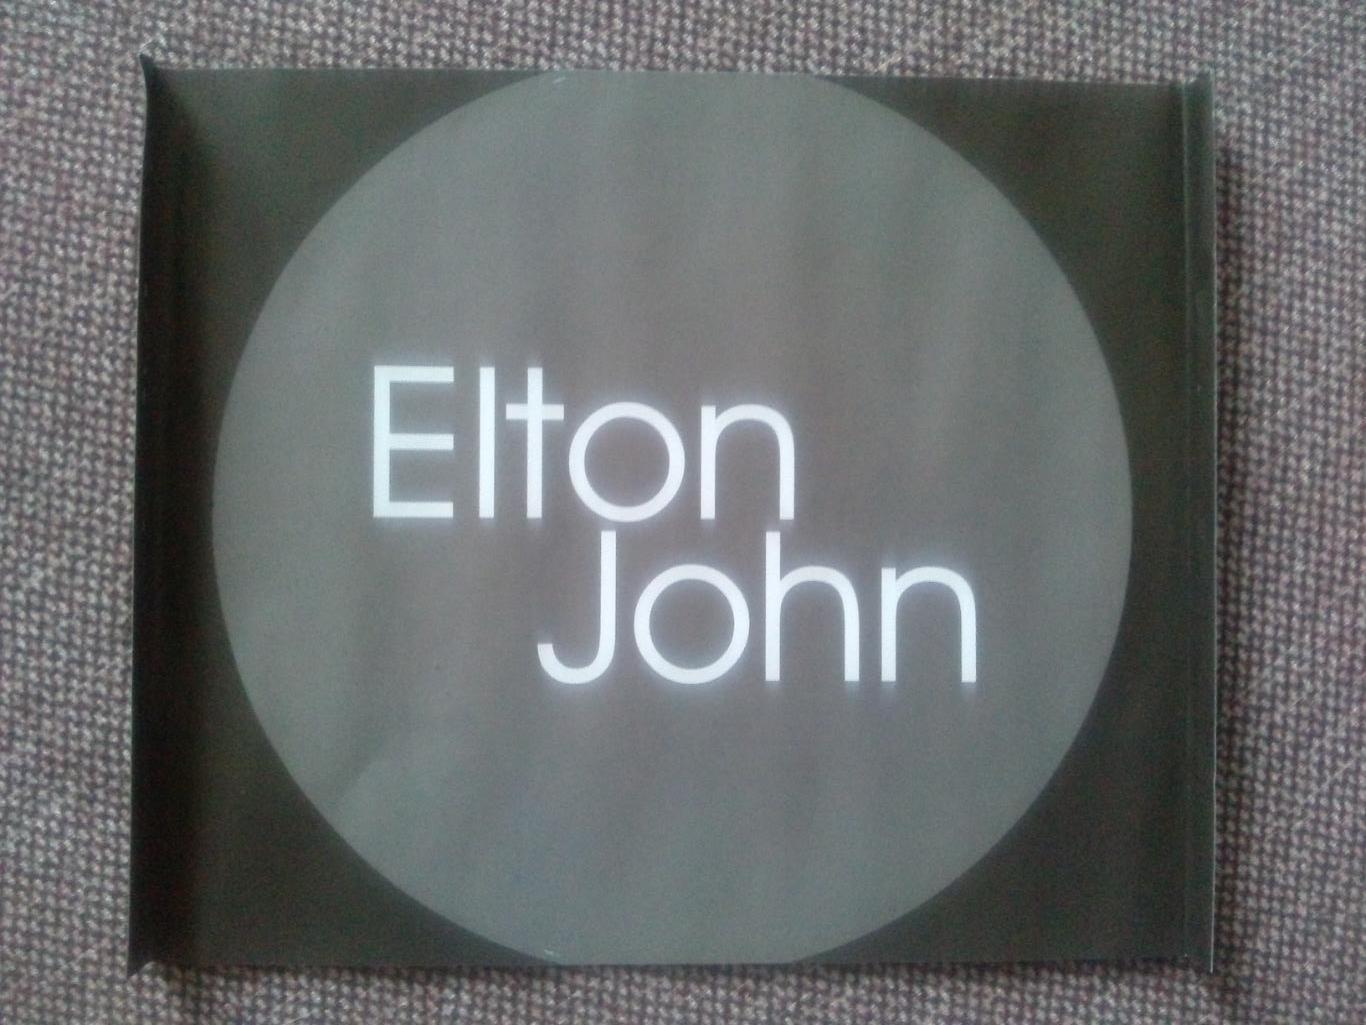 MP - 3 CD диск : Elton John (Элтон Джон) 1970 - 2006 гг. (14 альбомов) Рок 6